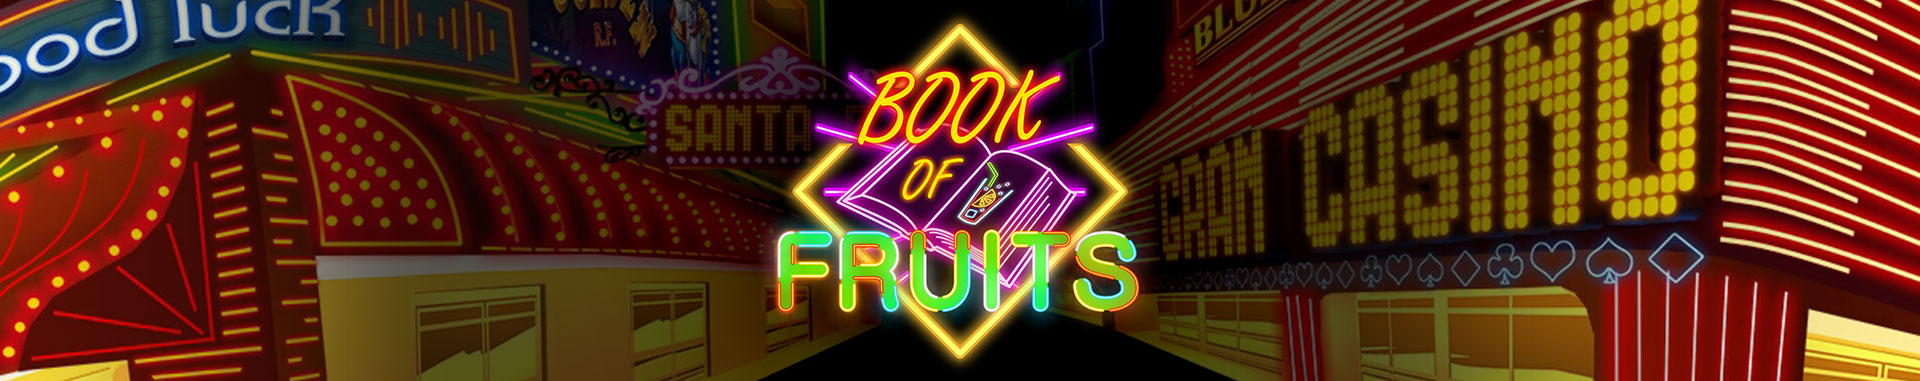 Tragaperras Online Book of Fruits